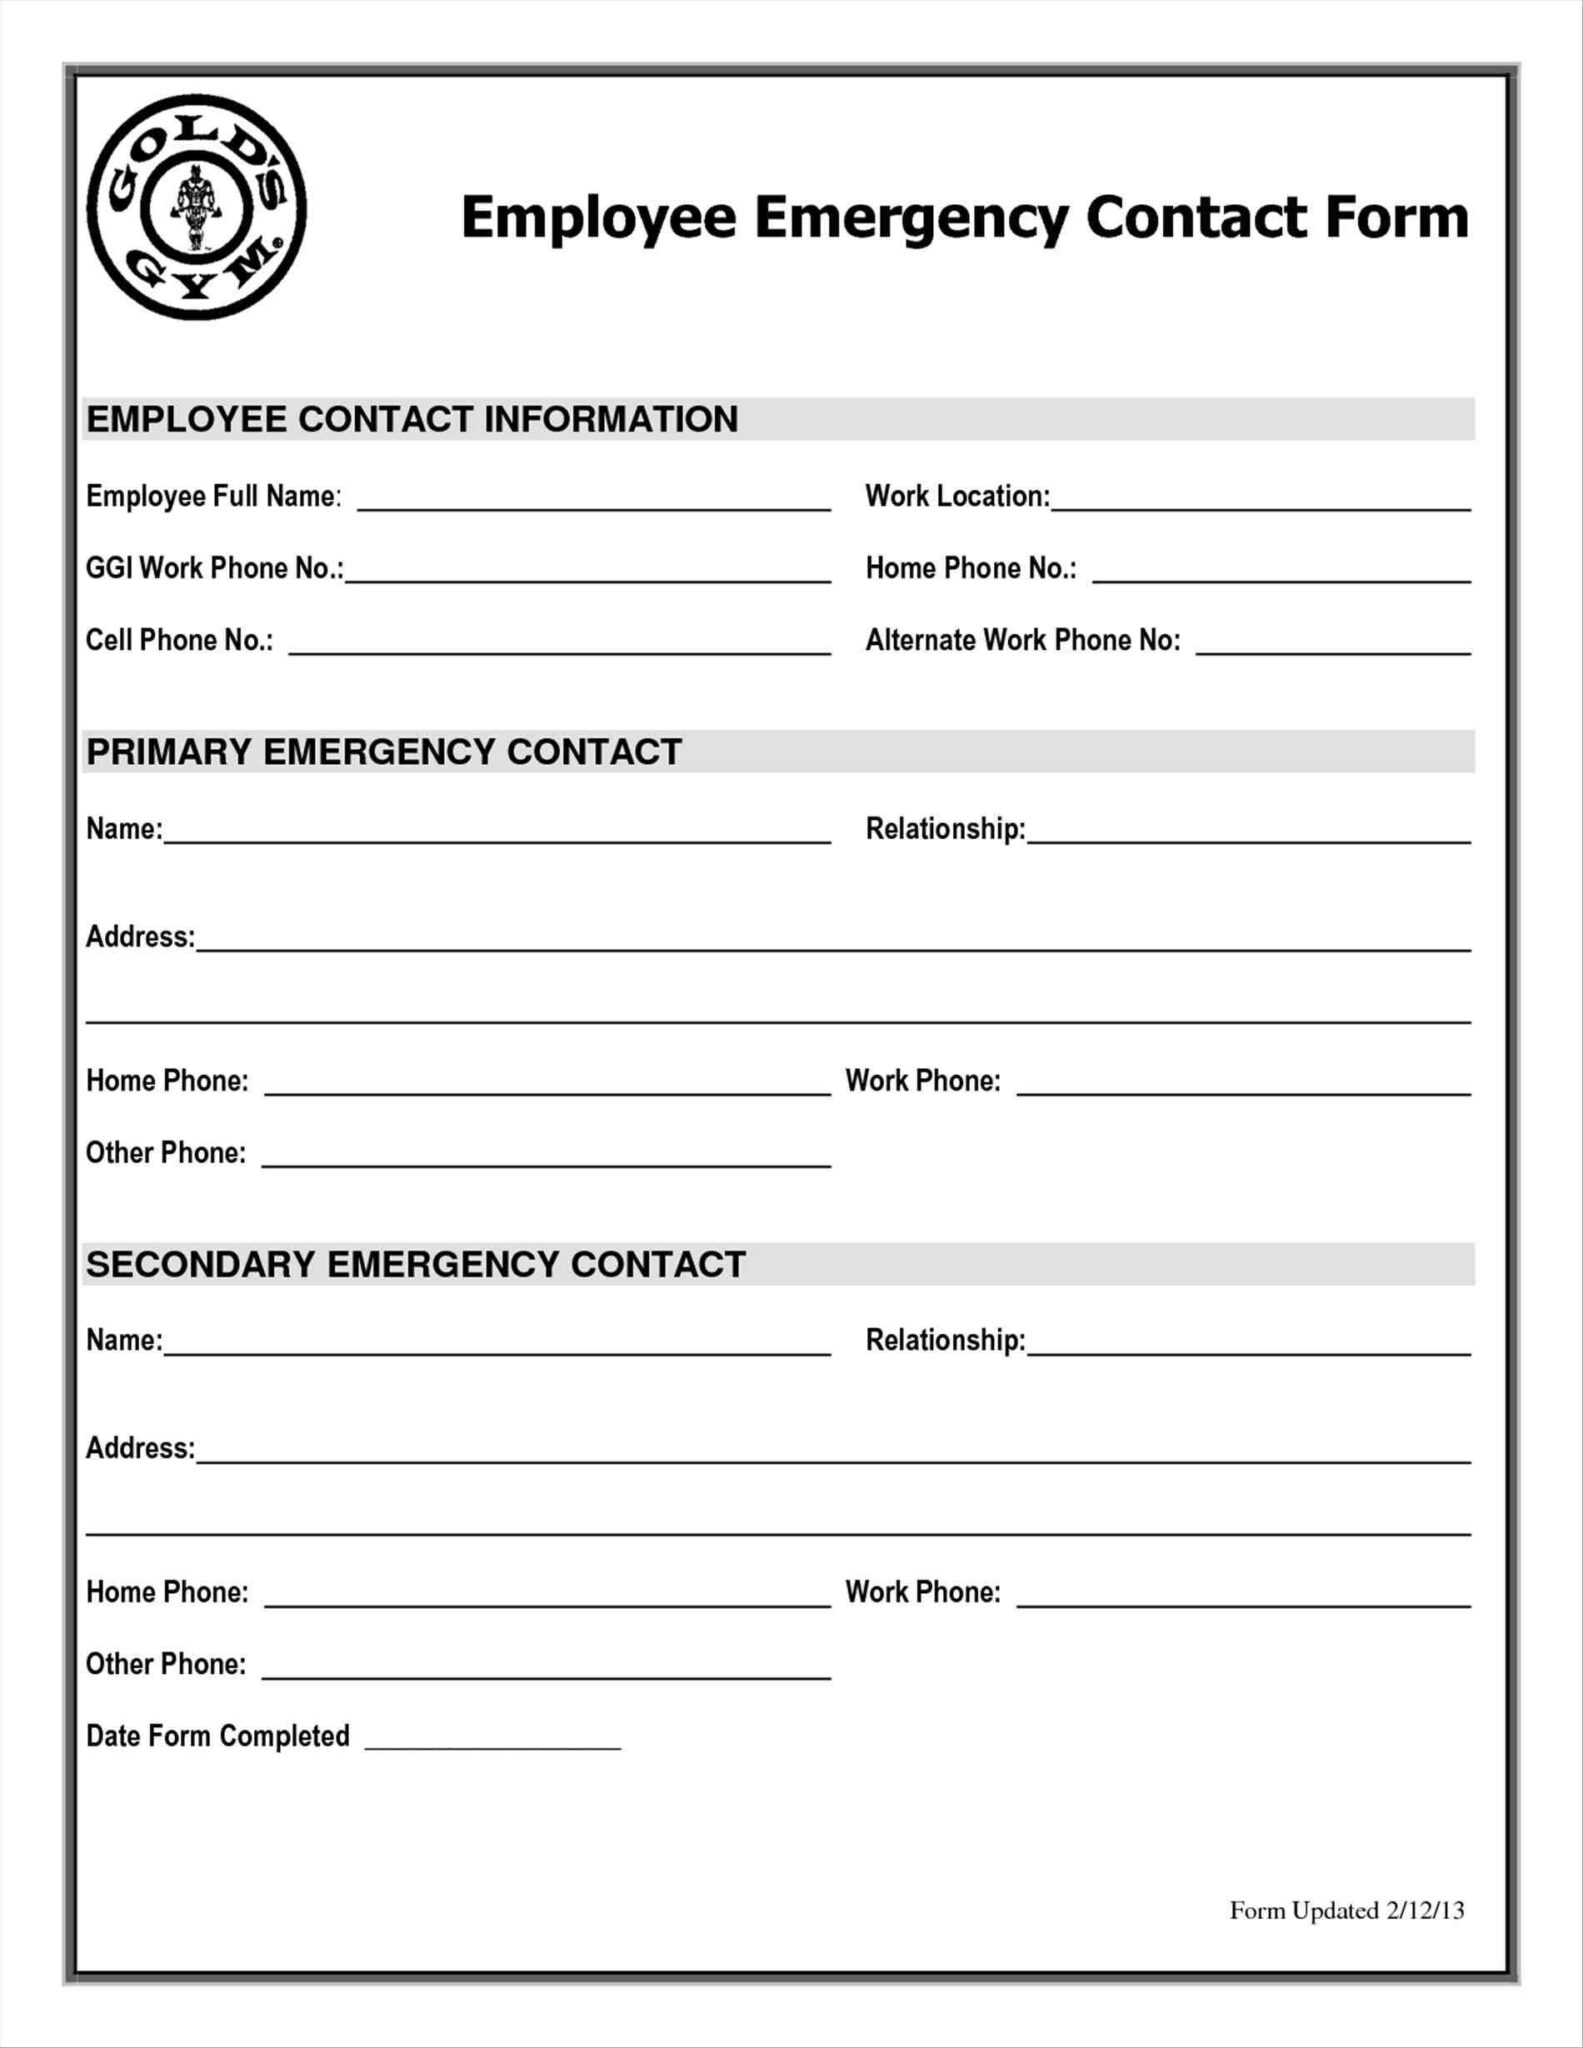 emergency-contact-form-template-word-dattstar-inside-emergency